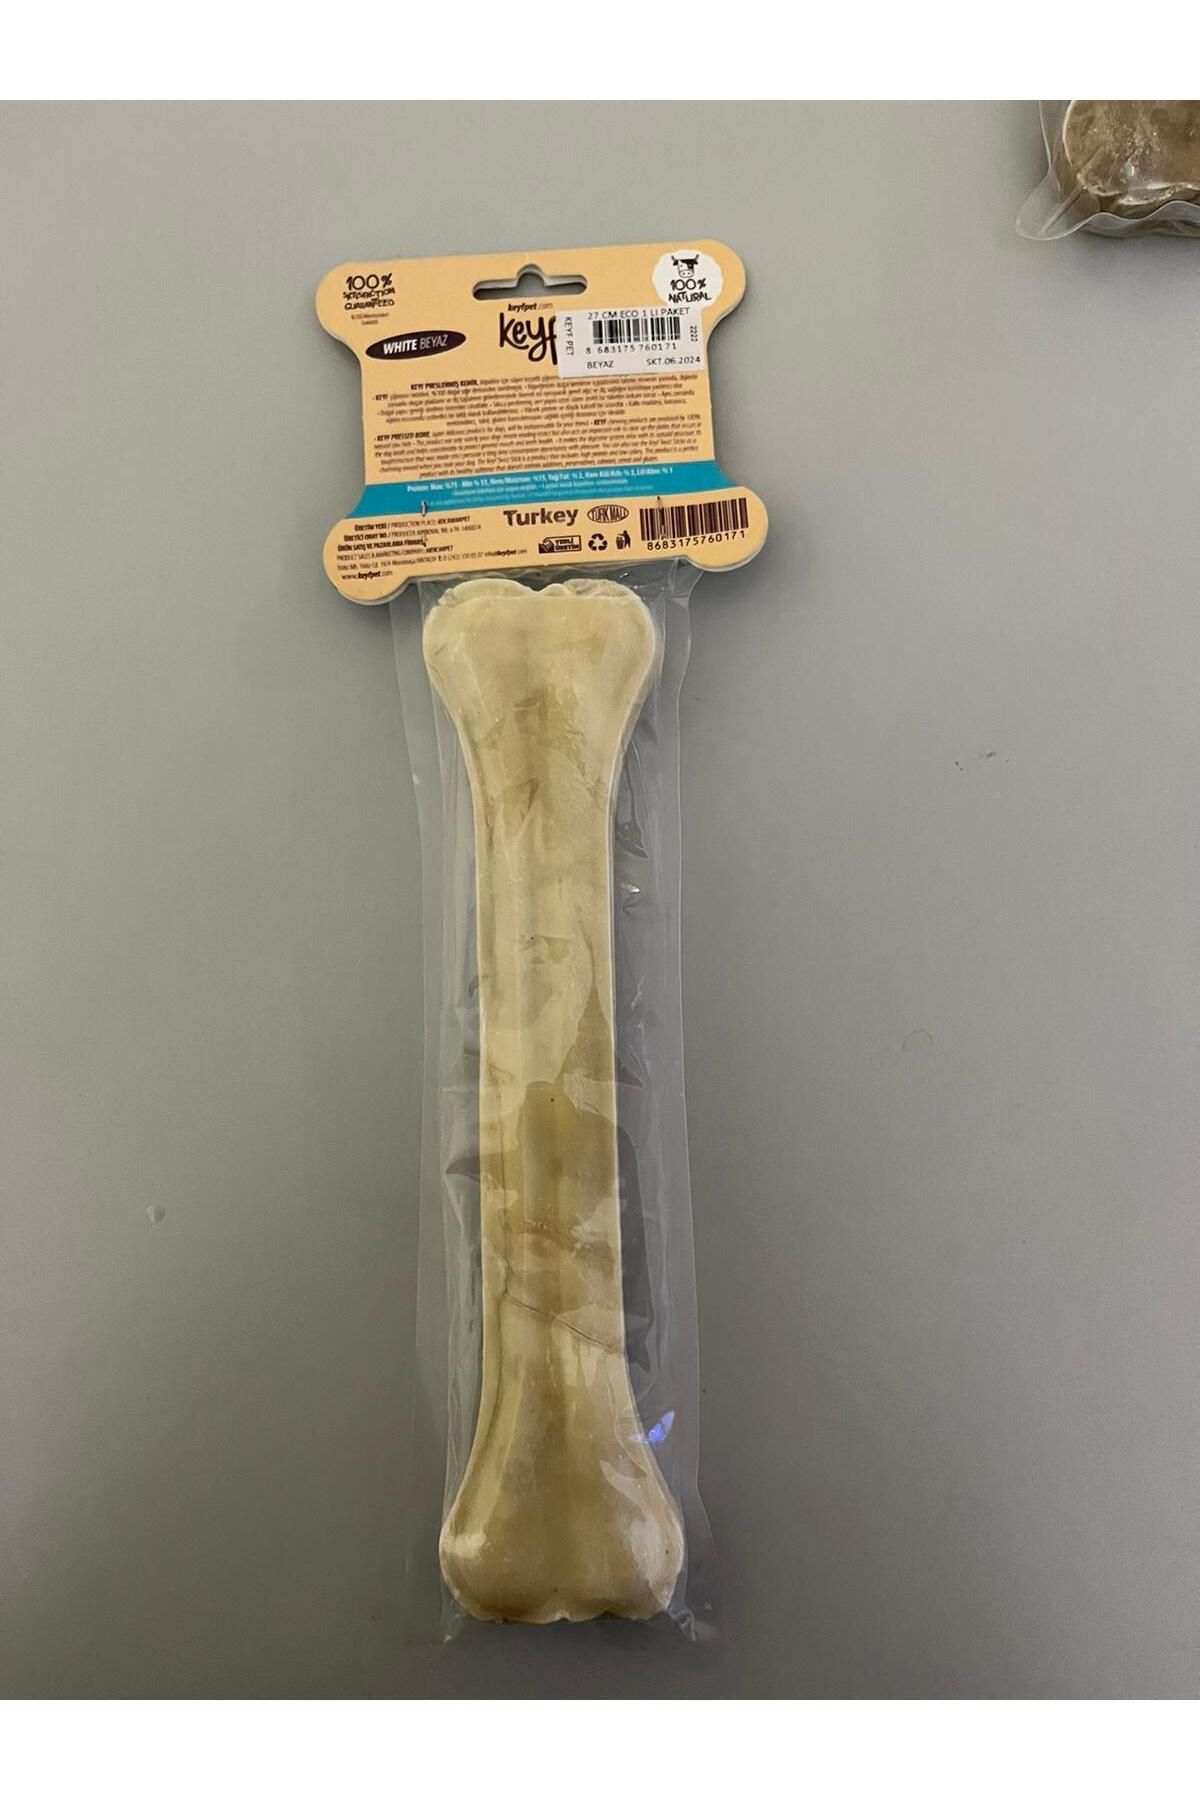 Kemik Keyf White Press Bone-Beyaz Pres Kemik köpek kemirme oyuncagı -M-22cm